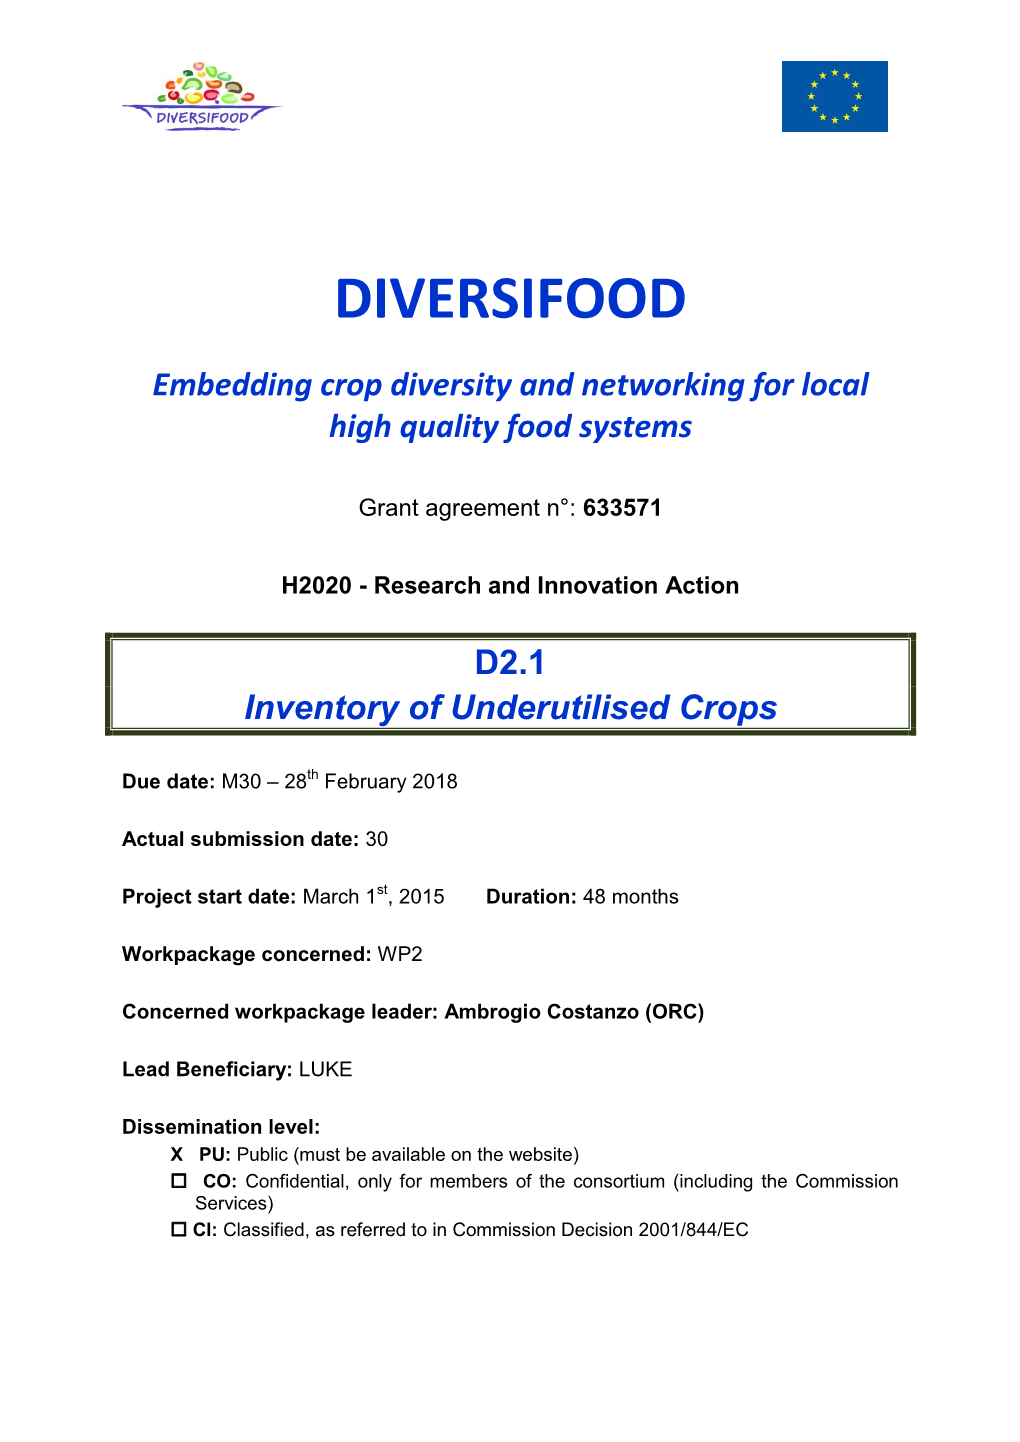 Inventory of Underutilised Crops